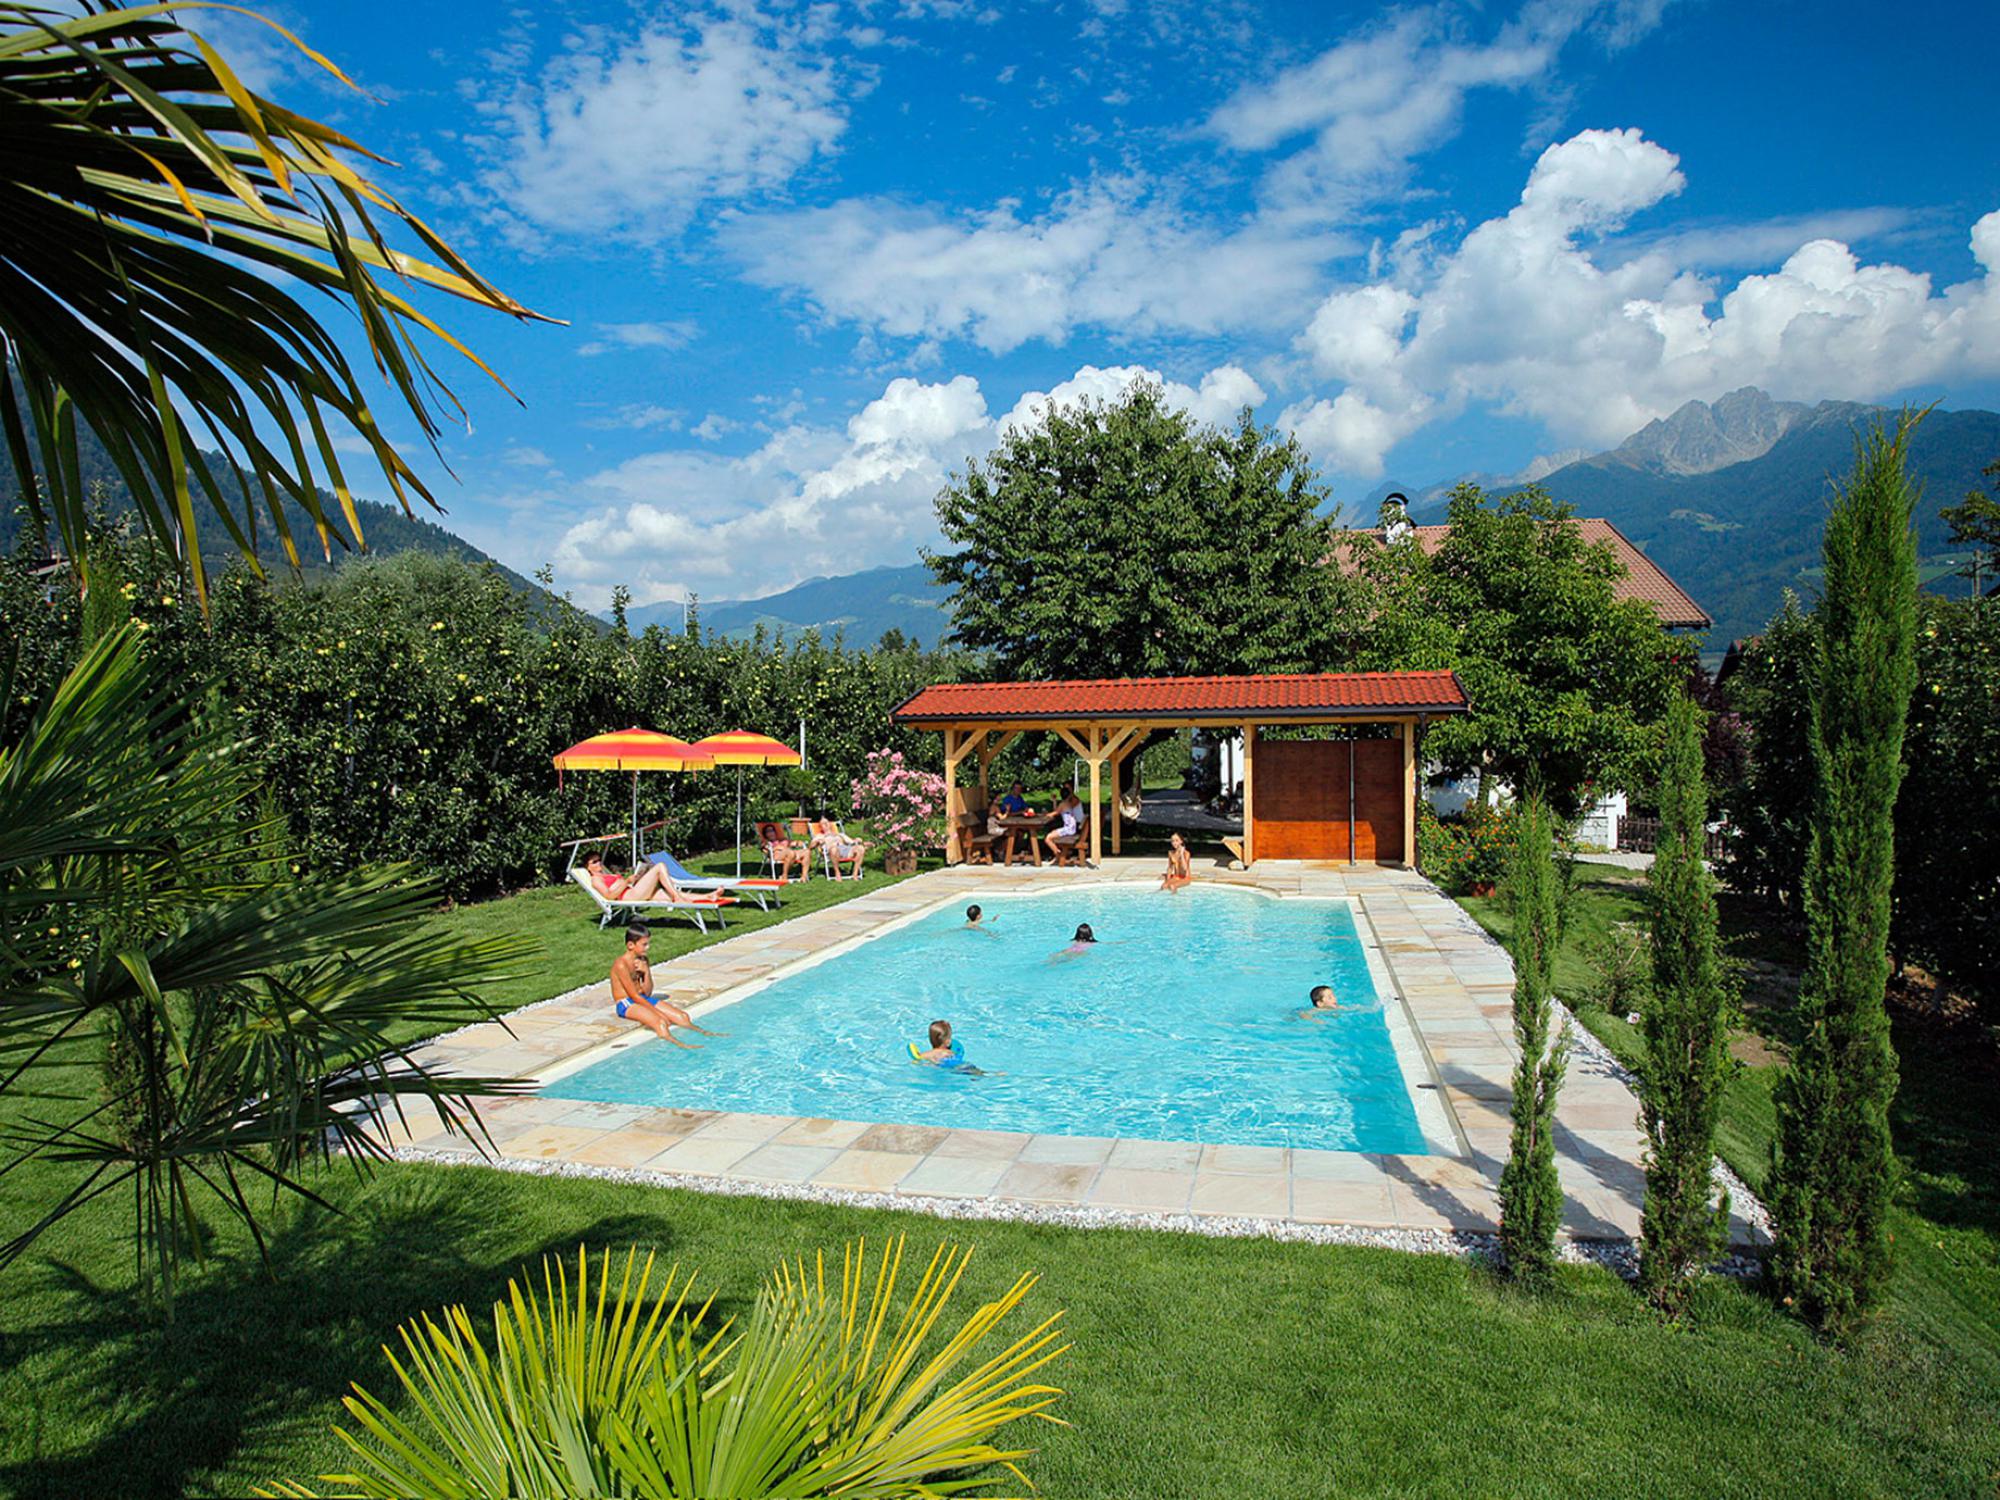 Swimming pool / Pool at the Rimmelehof in Tirolo